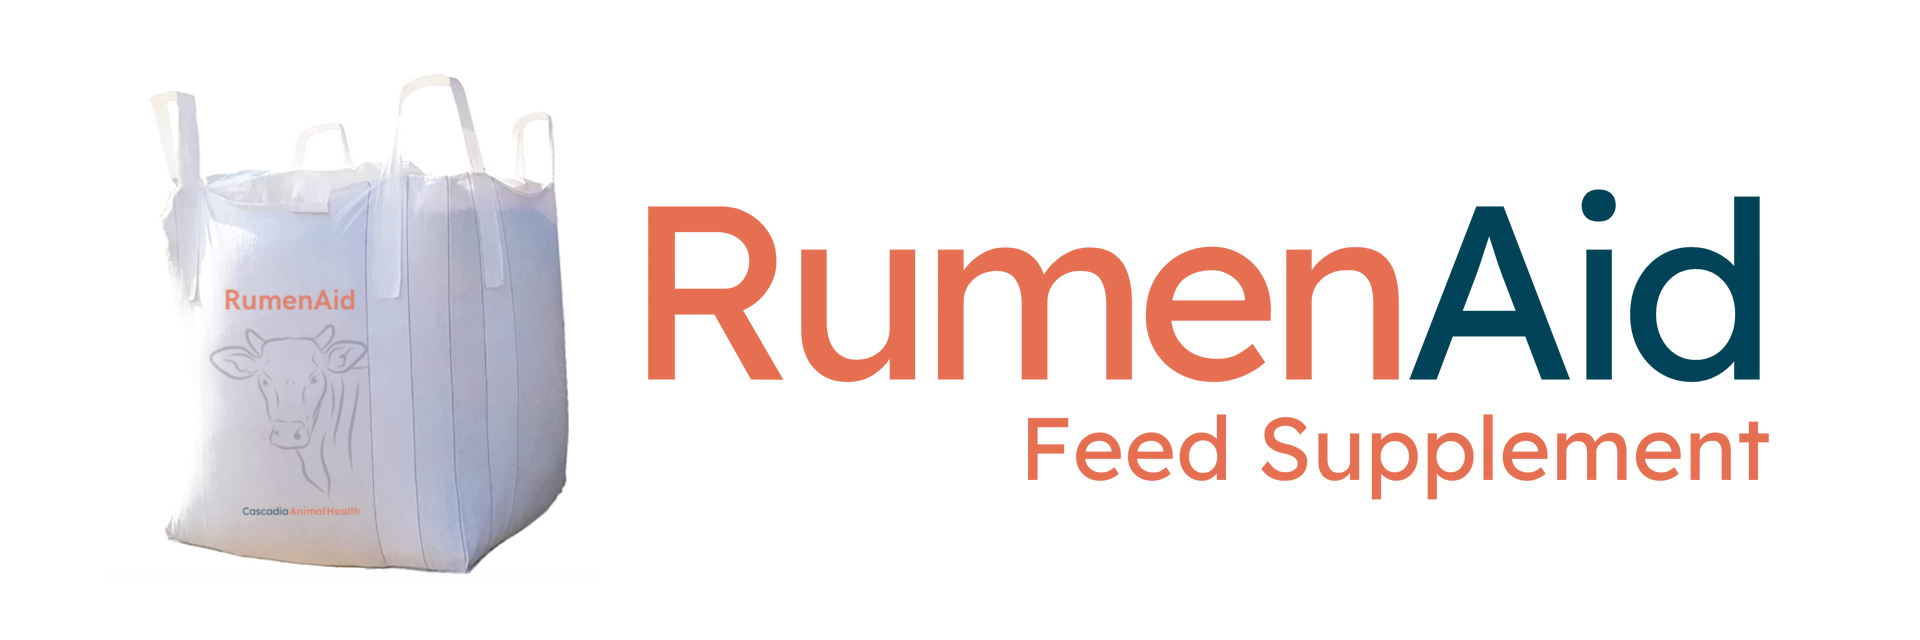 RumenAid Feed Supplement